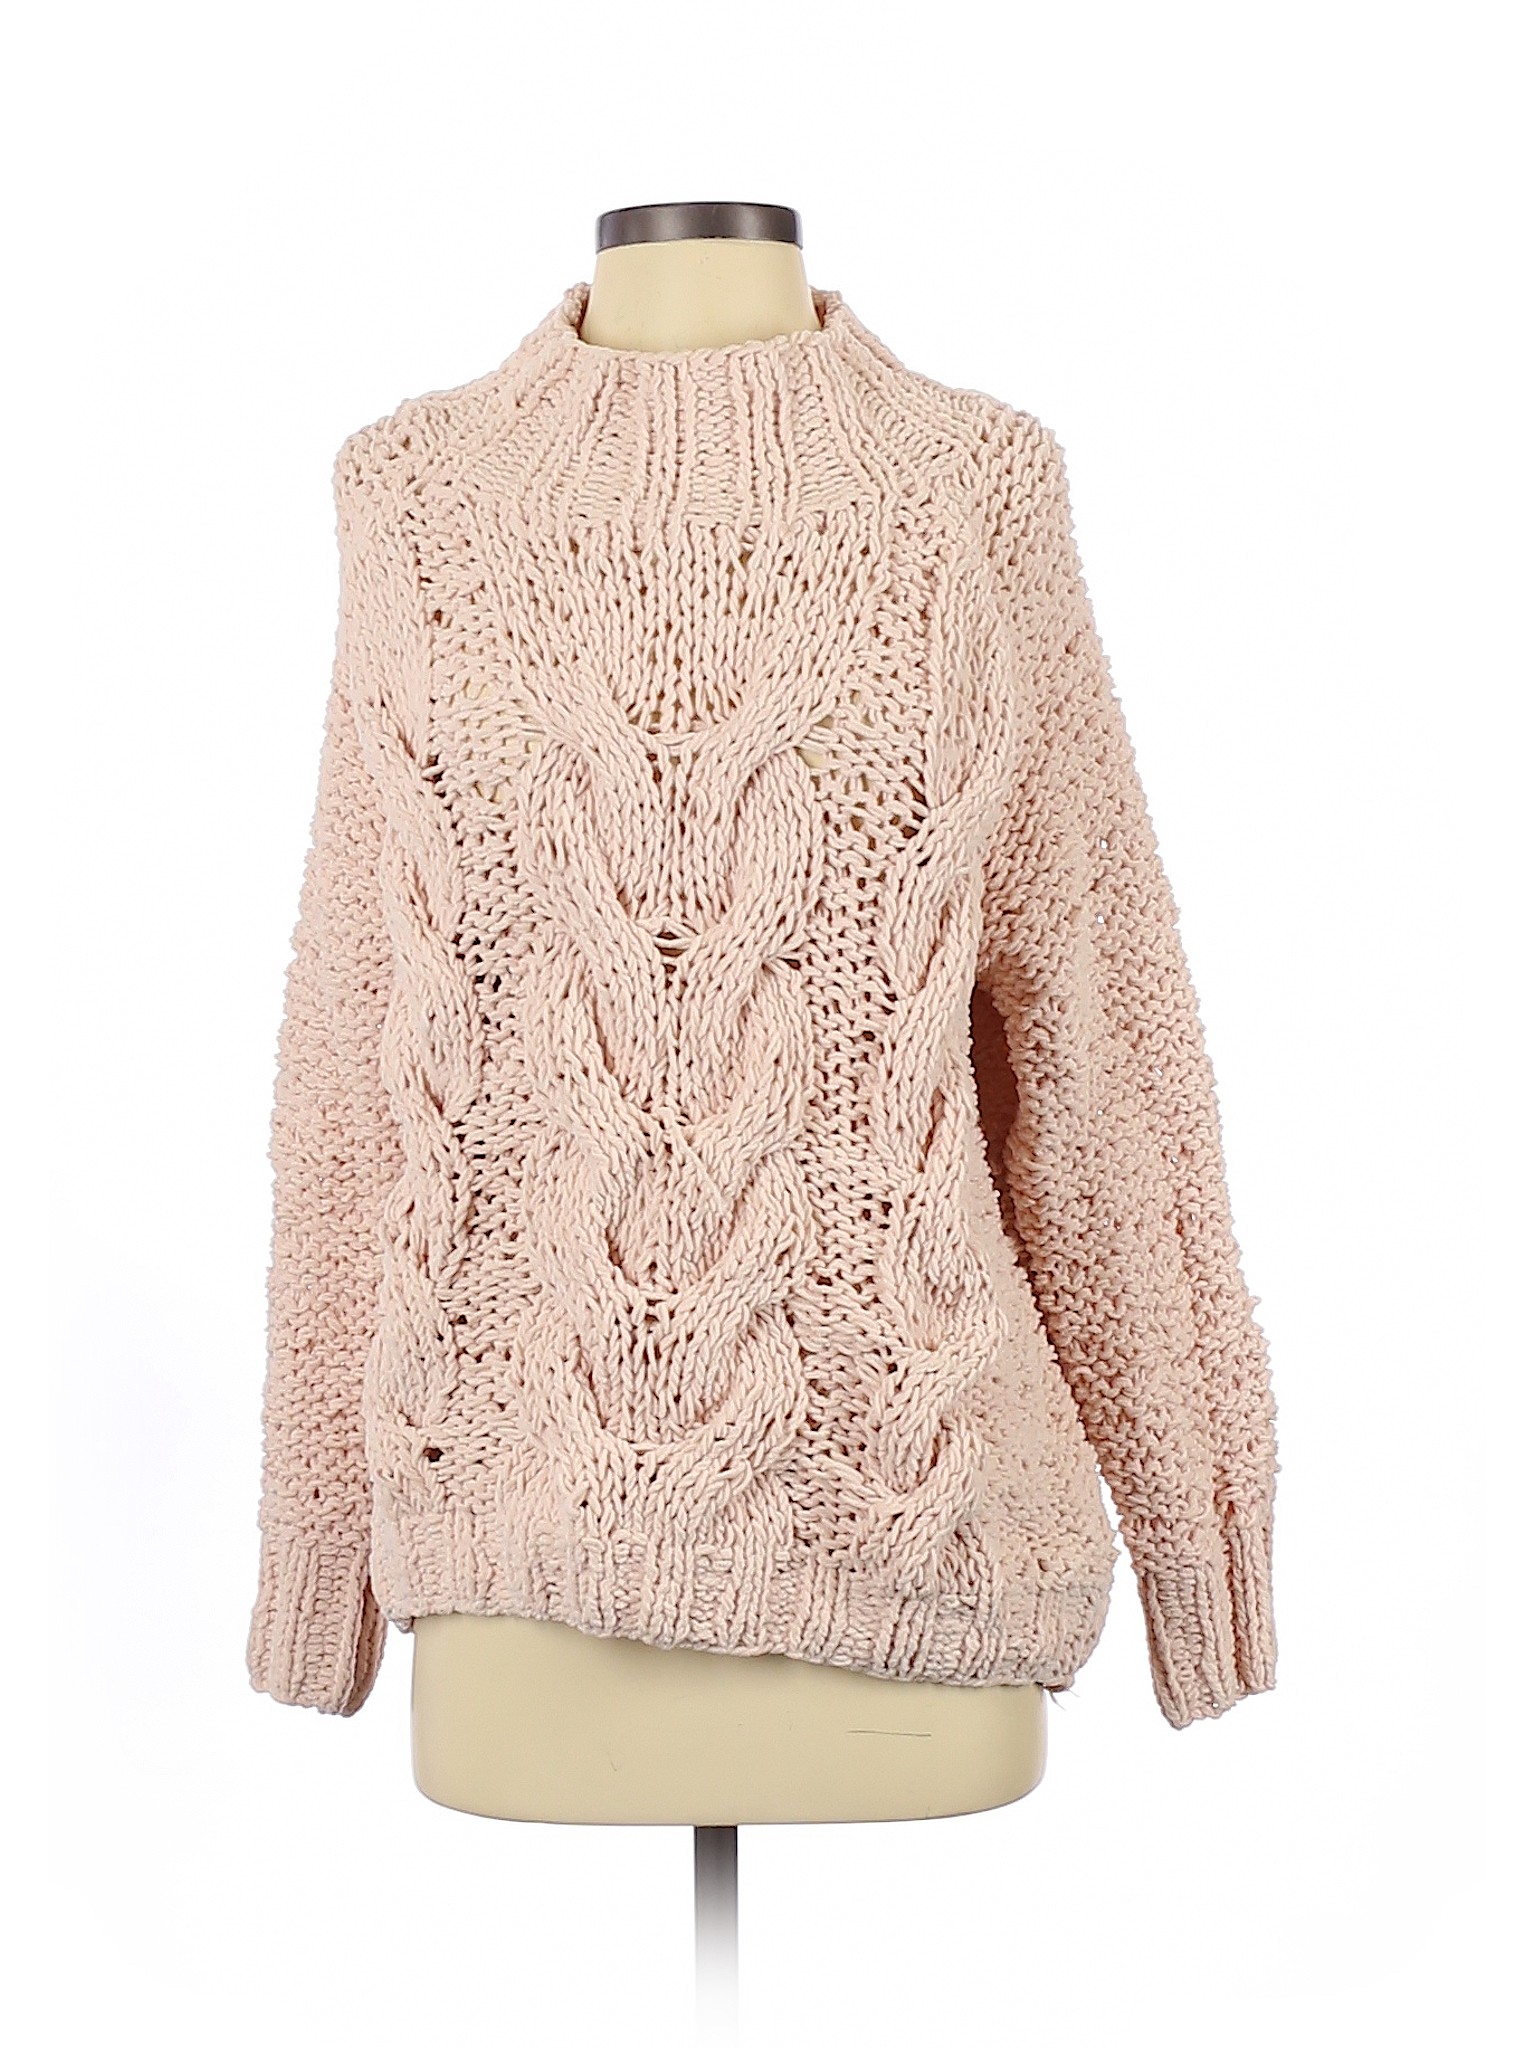 Vila Women Brown Pullover Sweater S | eBay